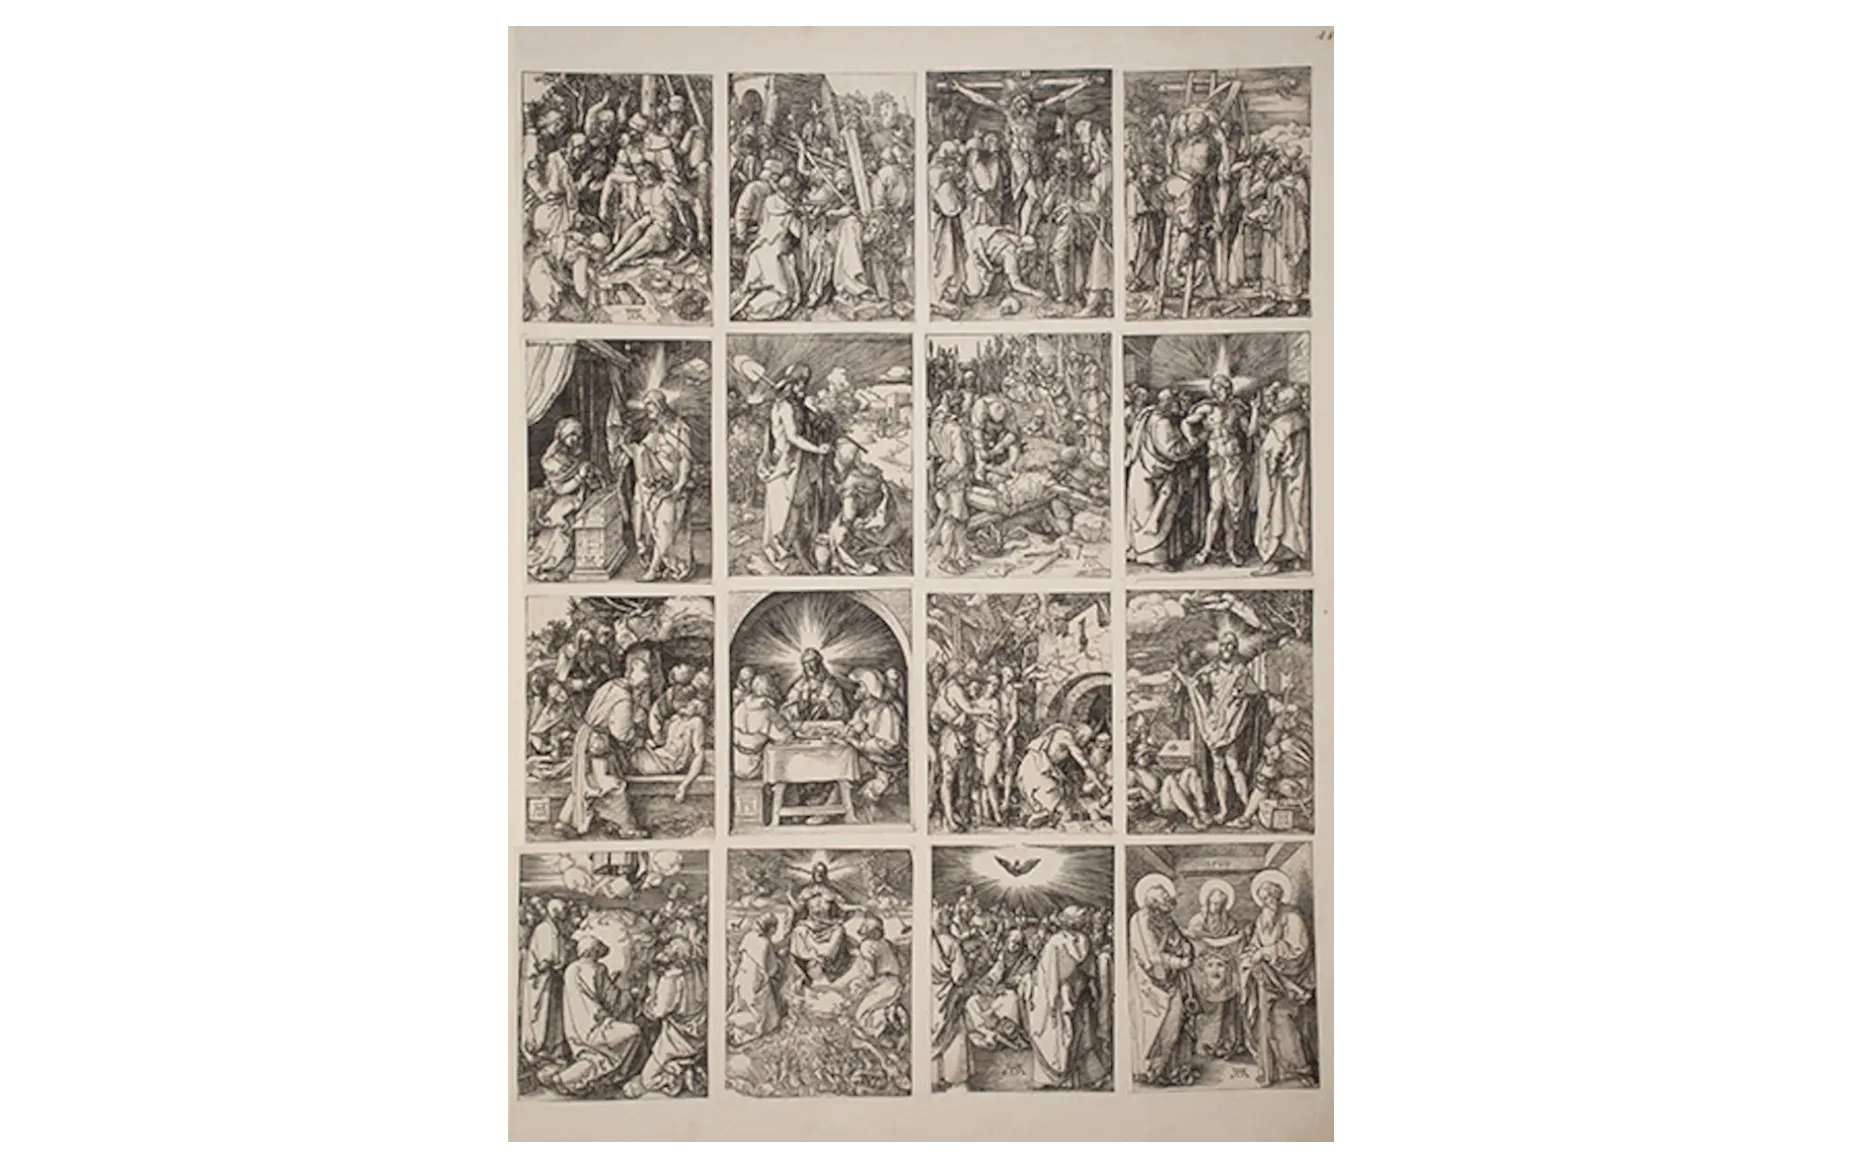 Dürer's Passion